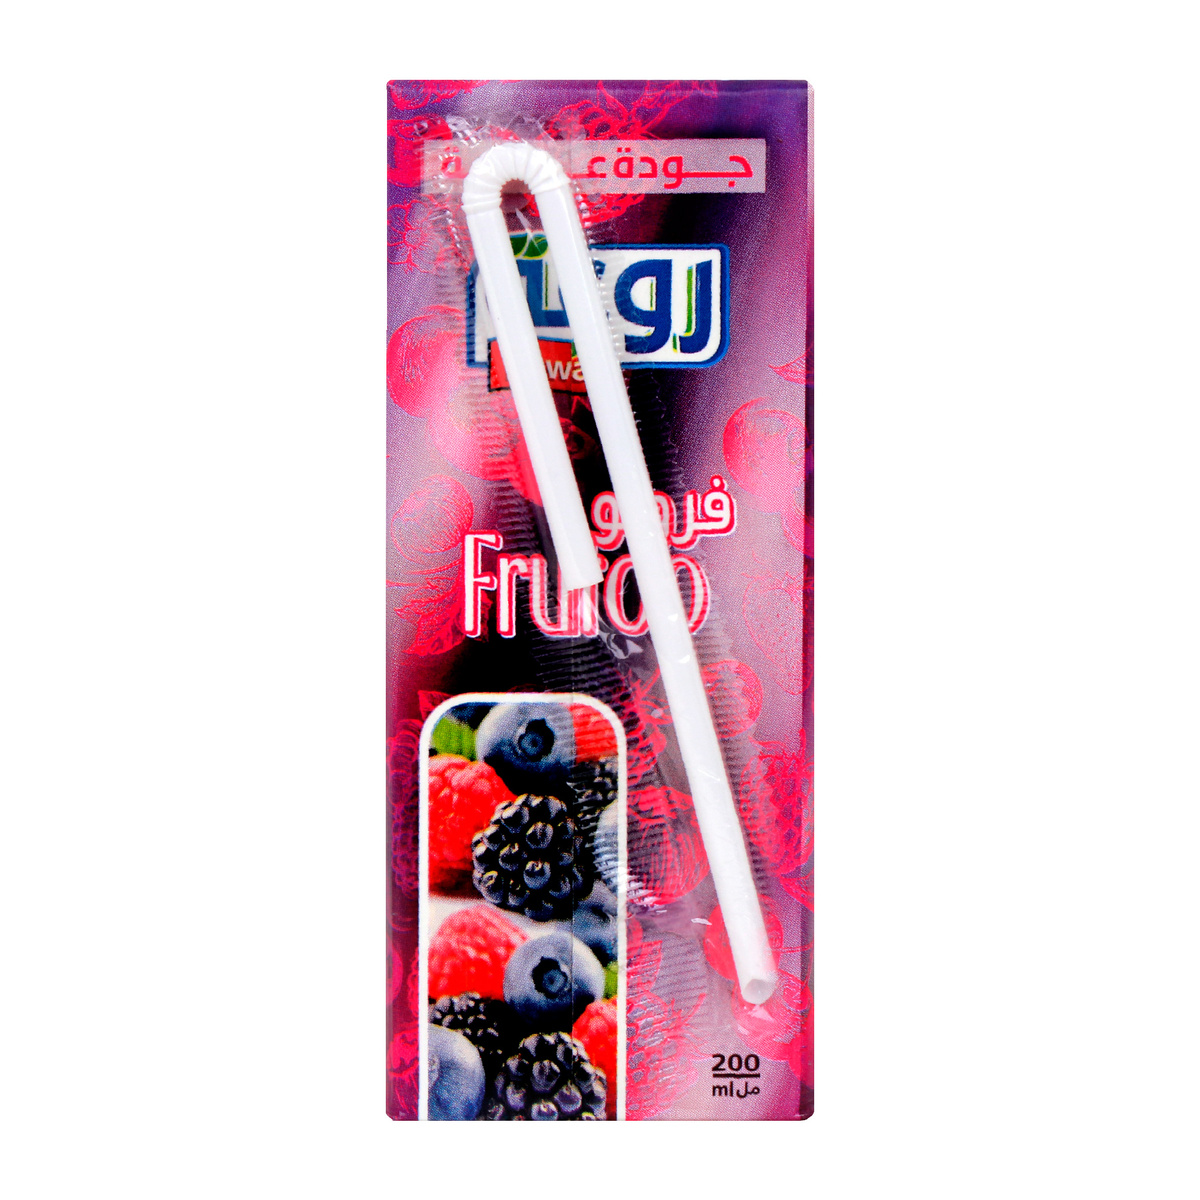 Rawa Flavored Dink Fruitoo Berries Mix 200ml